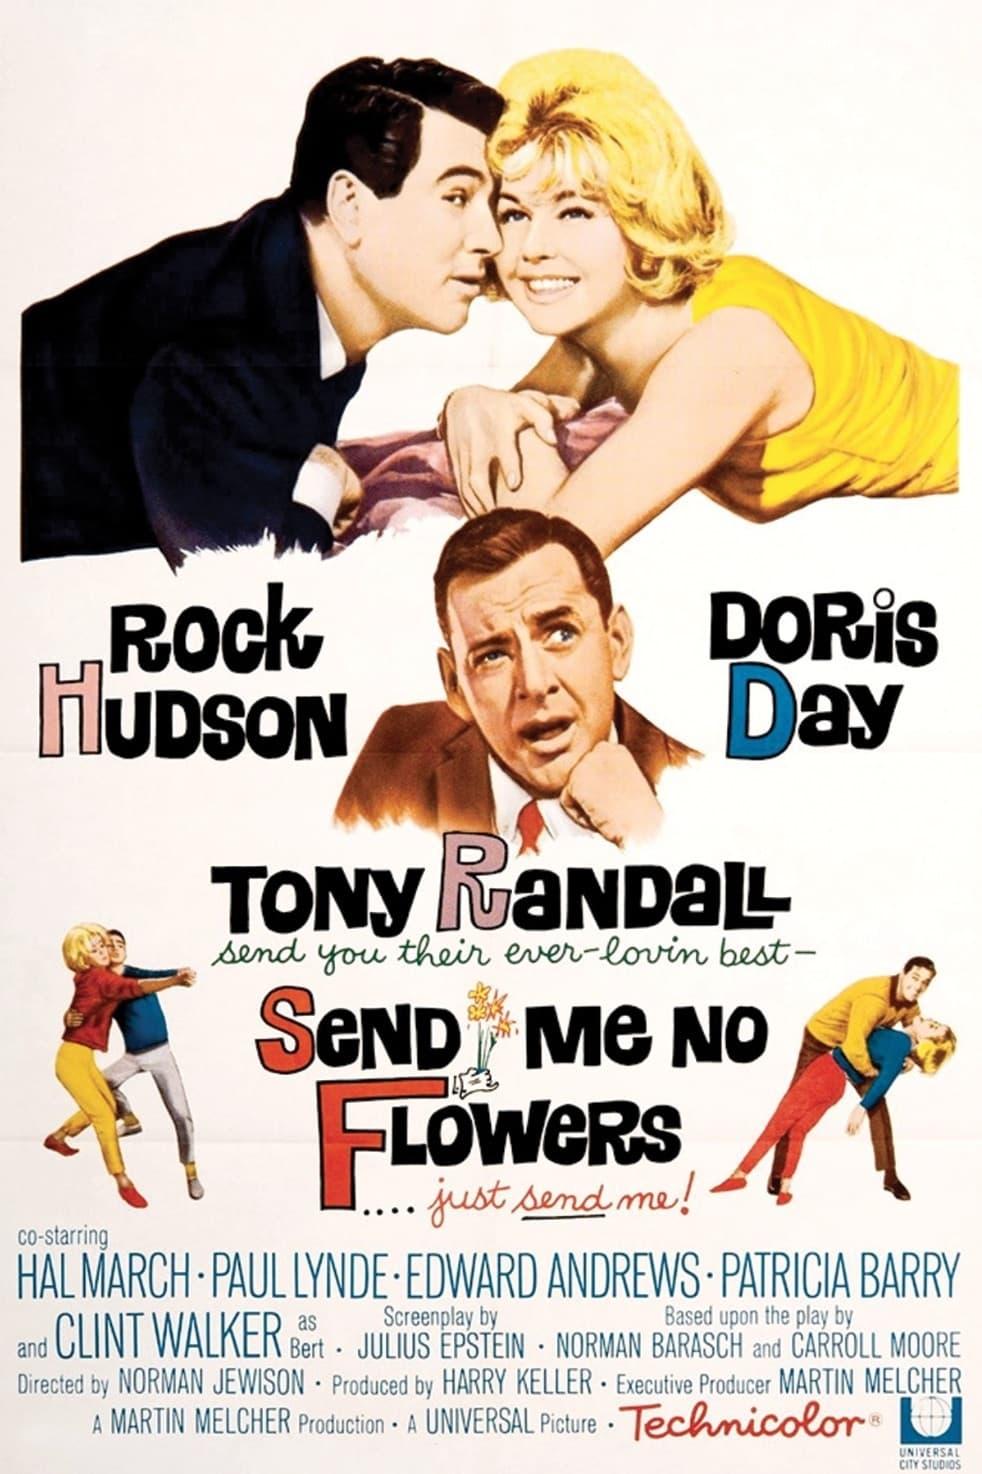 Send Me No Flowers poster